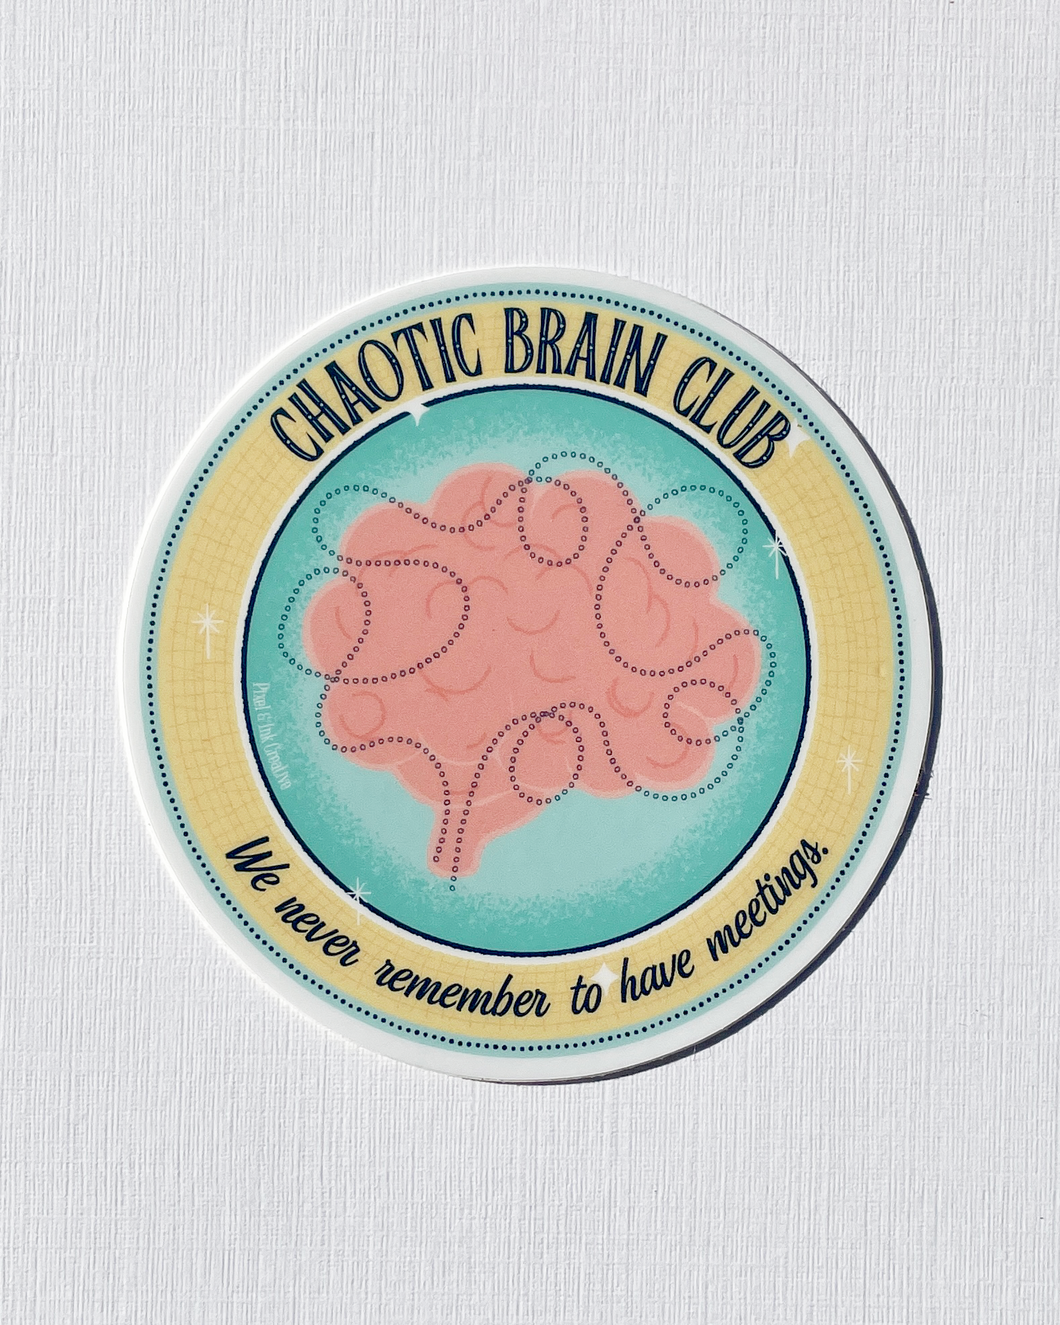 Chaotic Brain Club Sticker